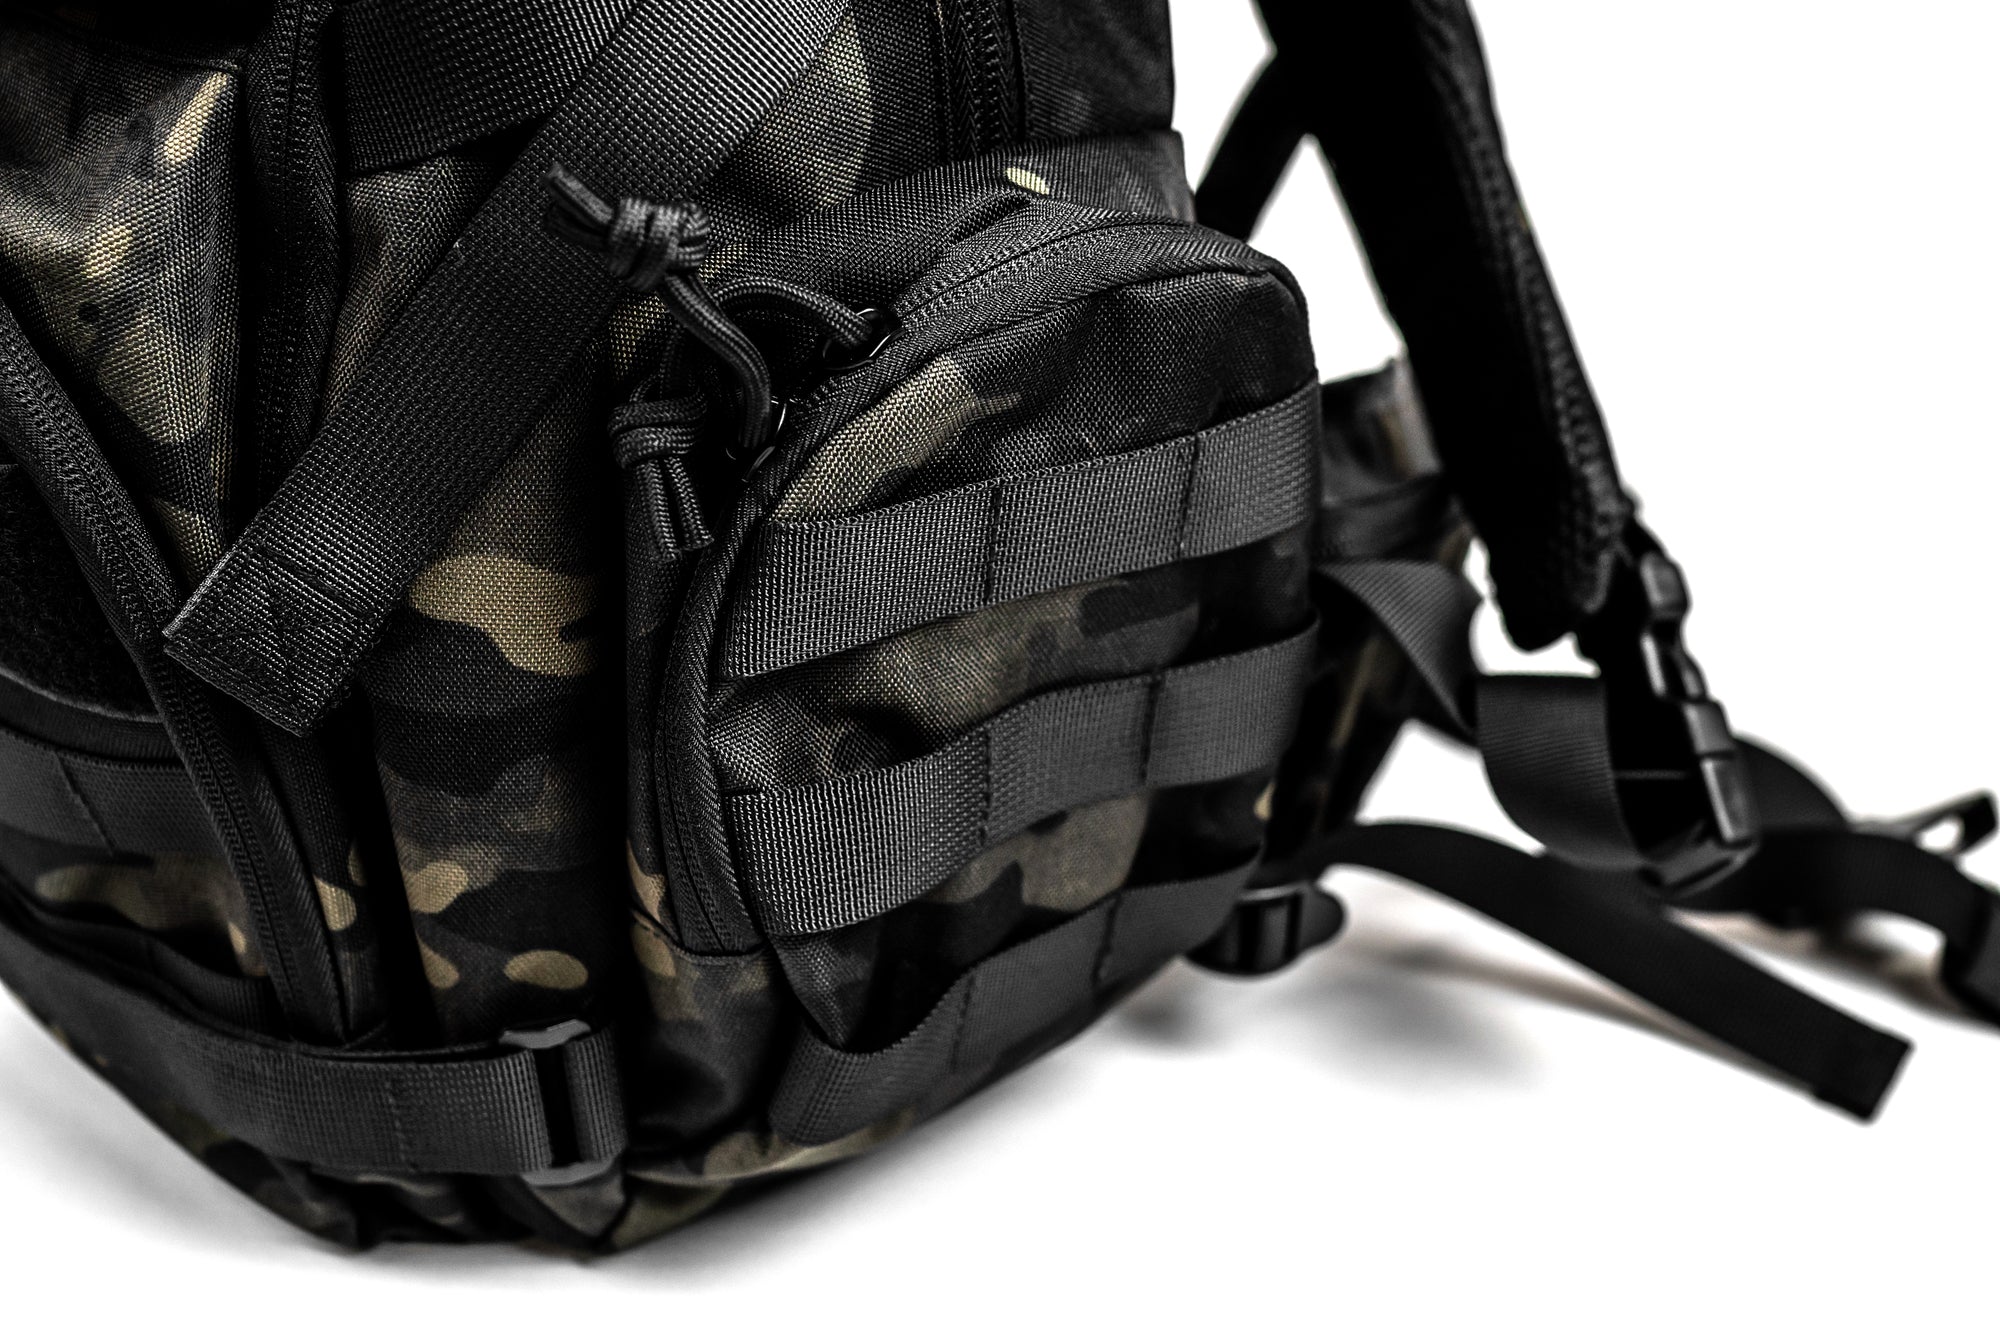 Covert Backpack - Black - Live Fit. Apparel